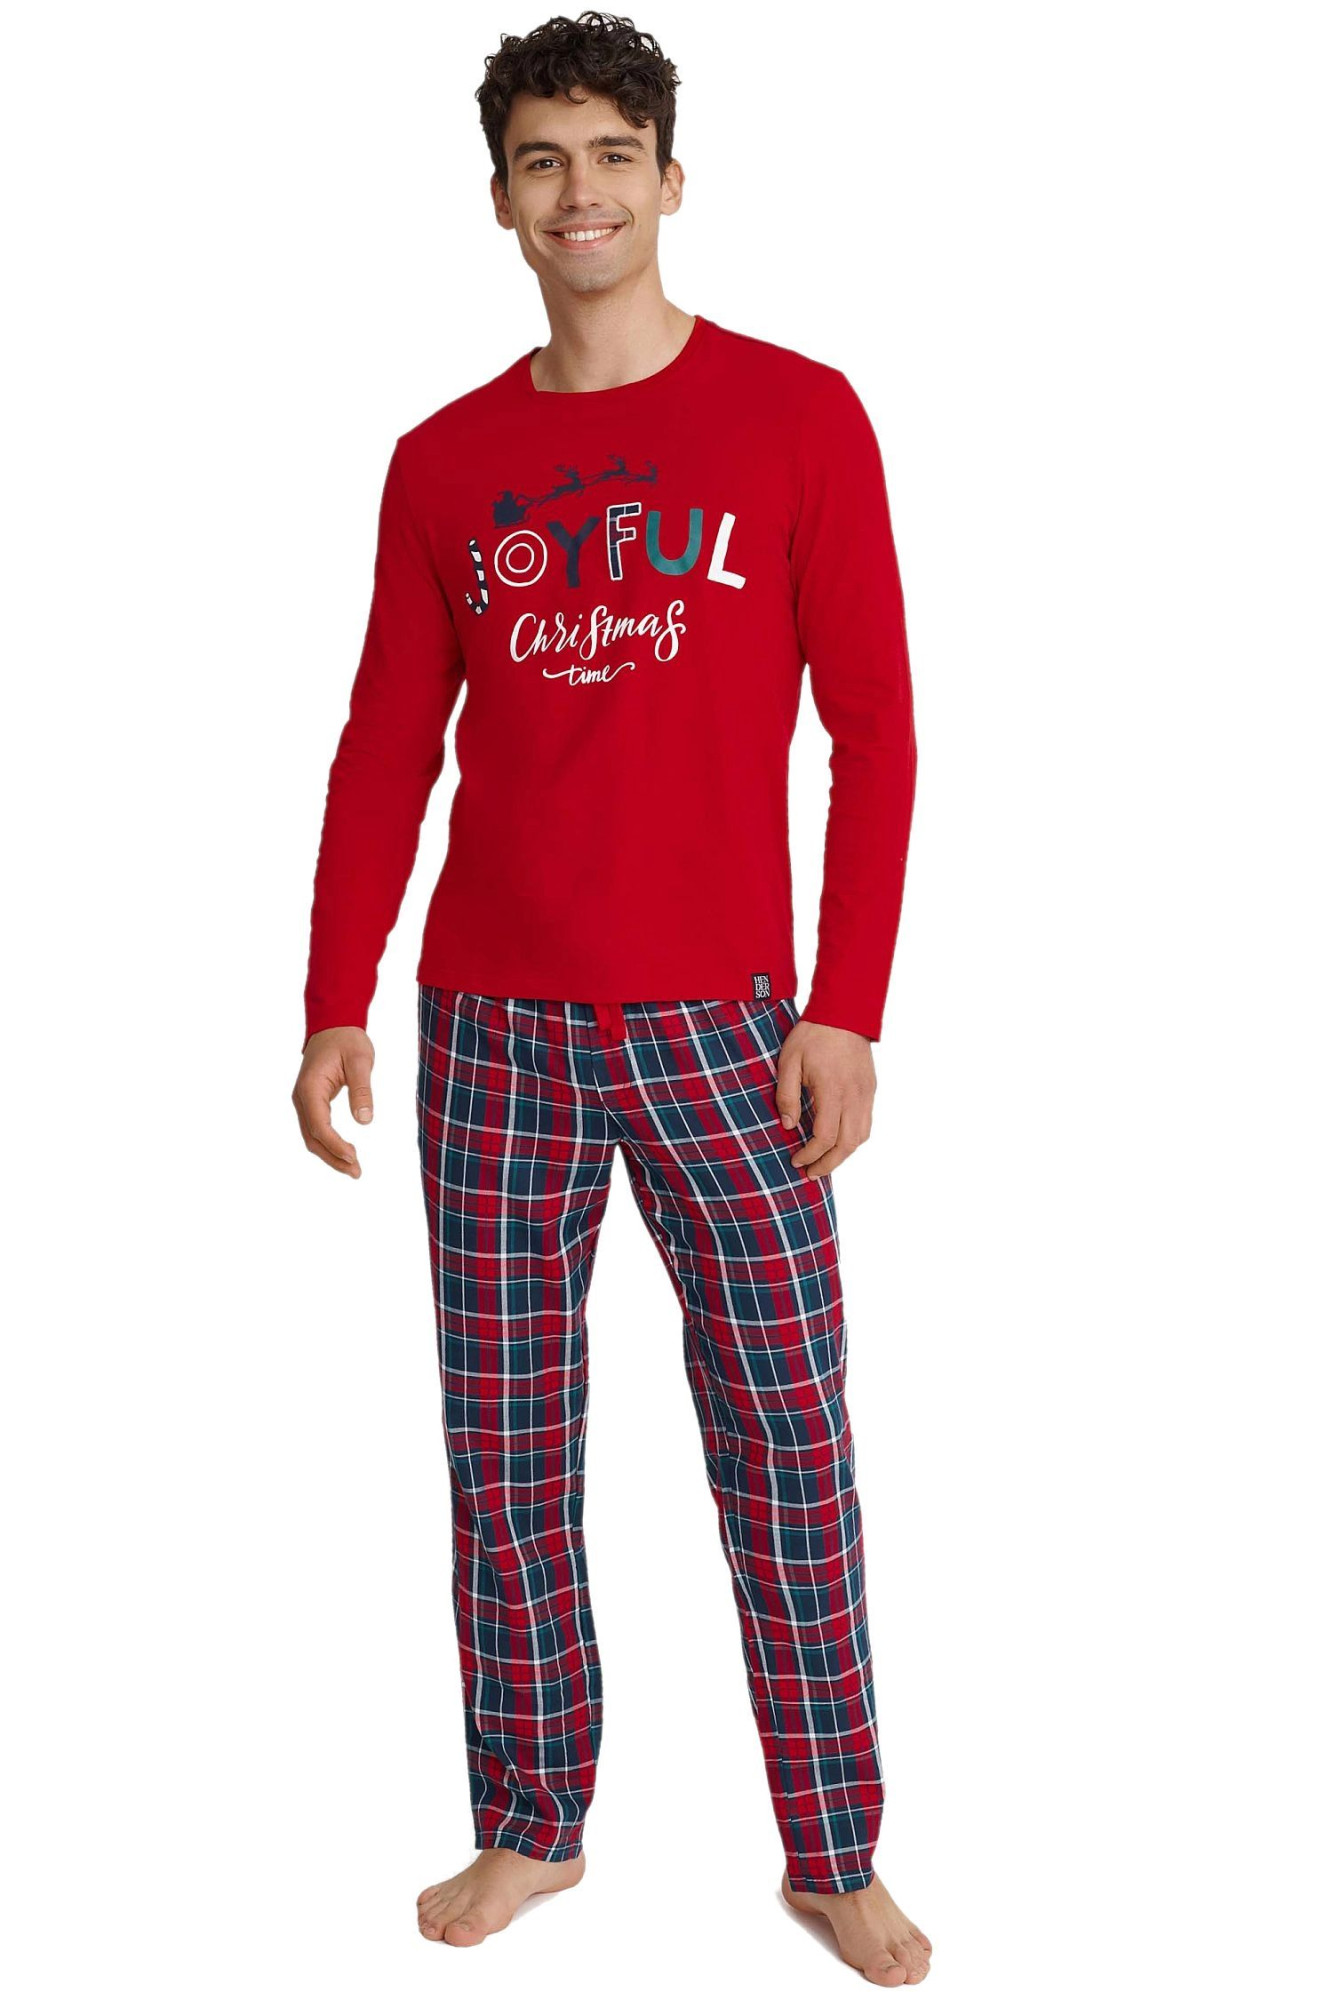 Pánské pyžamo 40950-33X Glance Červená s tmavě modrou - HENDERSON červená/káro M